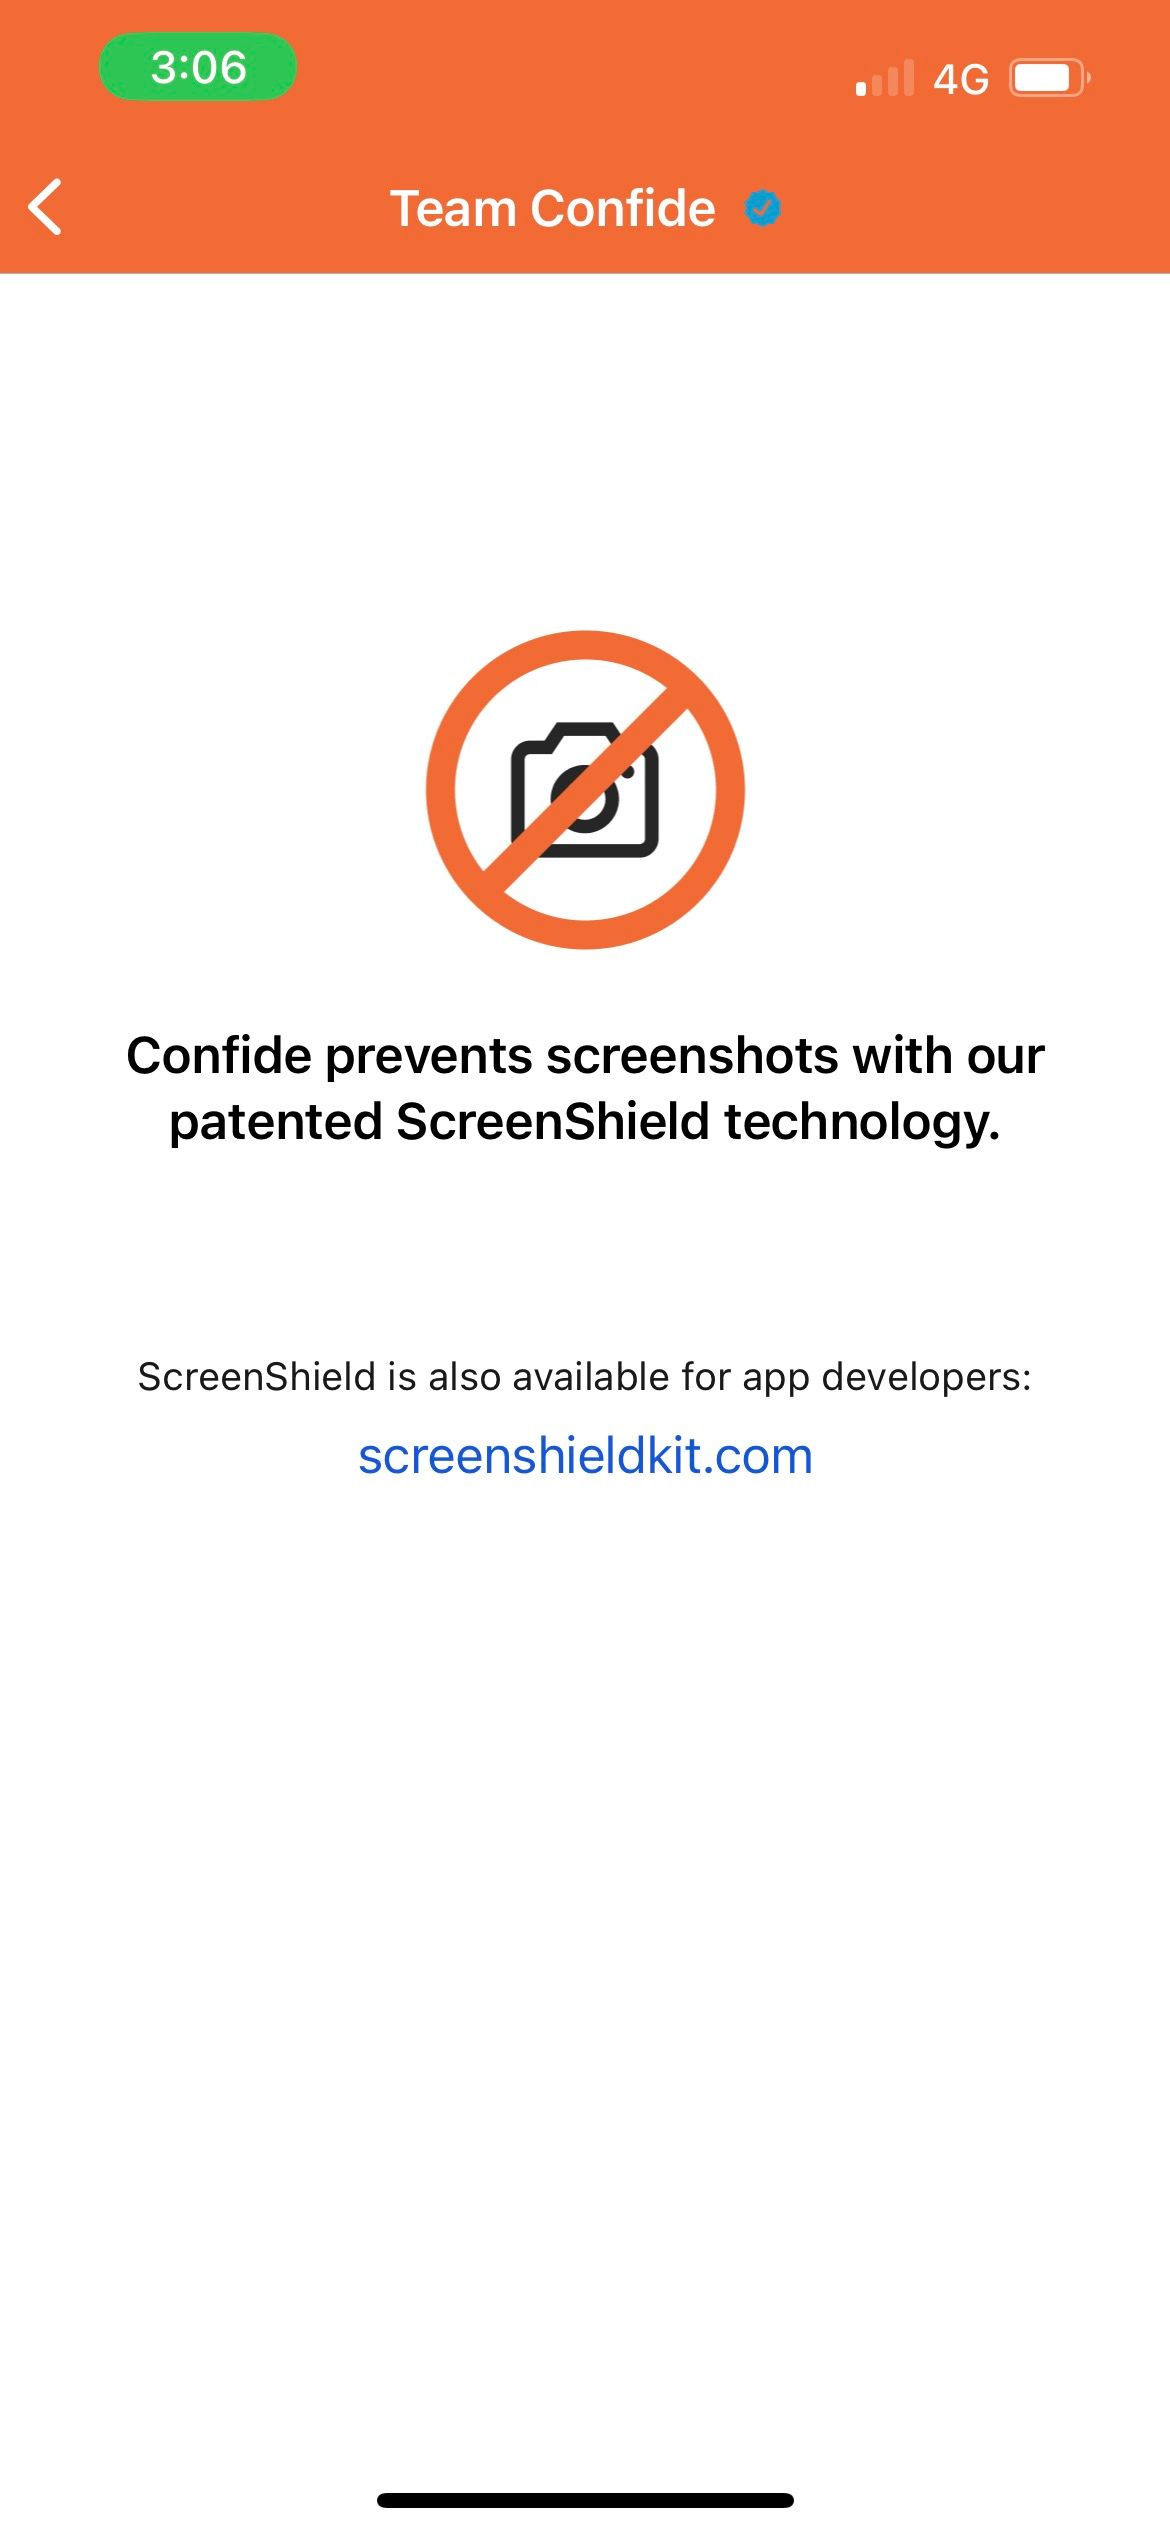 confide anti-screenshot technology 